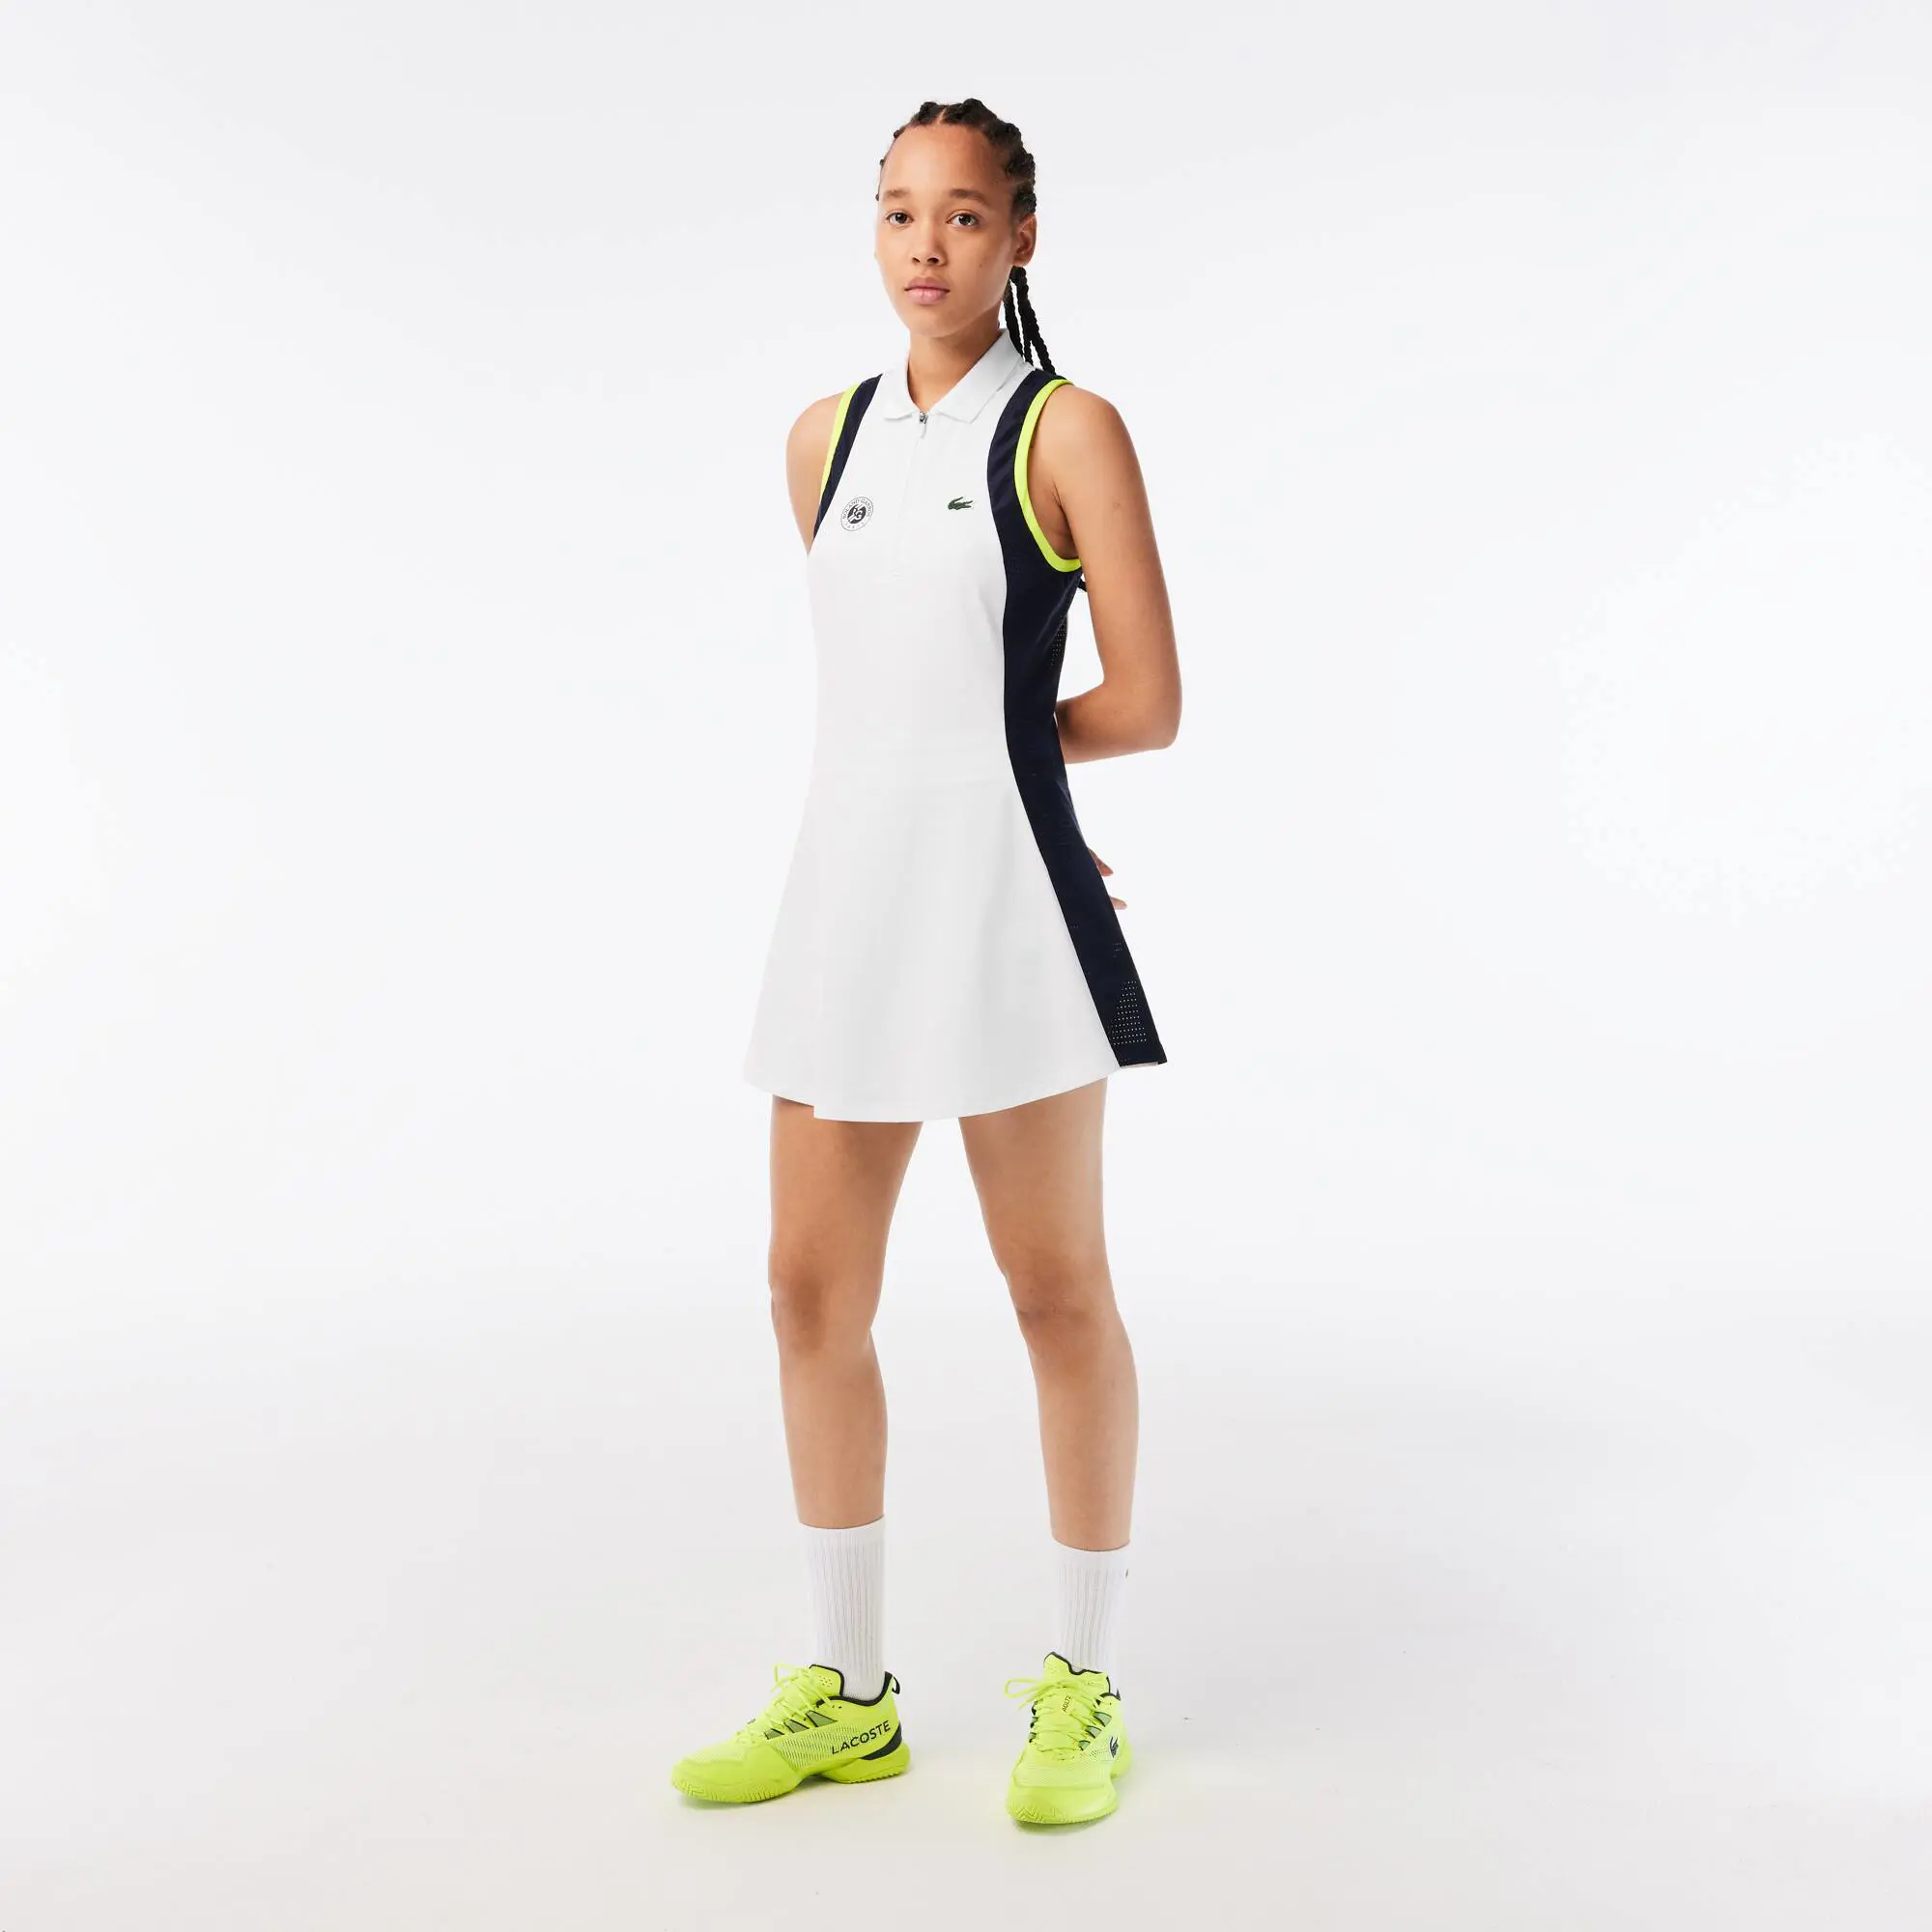 Lacoste Women’s Lacoste Sport Roland Garros Edition Sleeveless Dress. 1